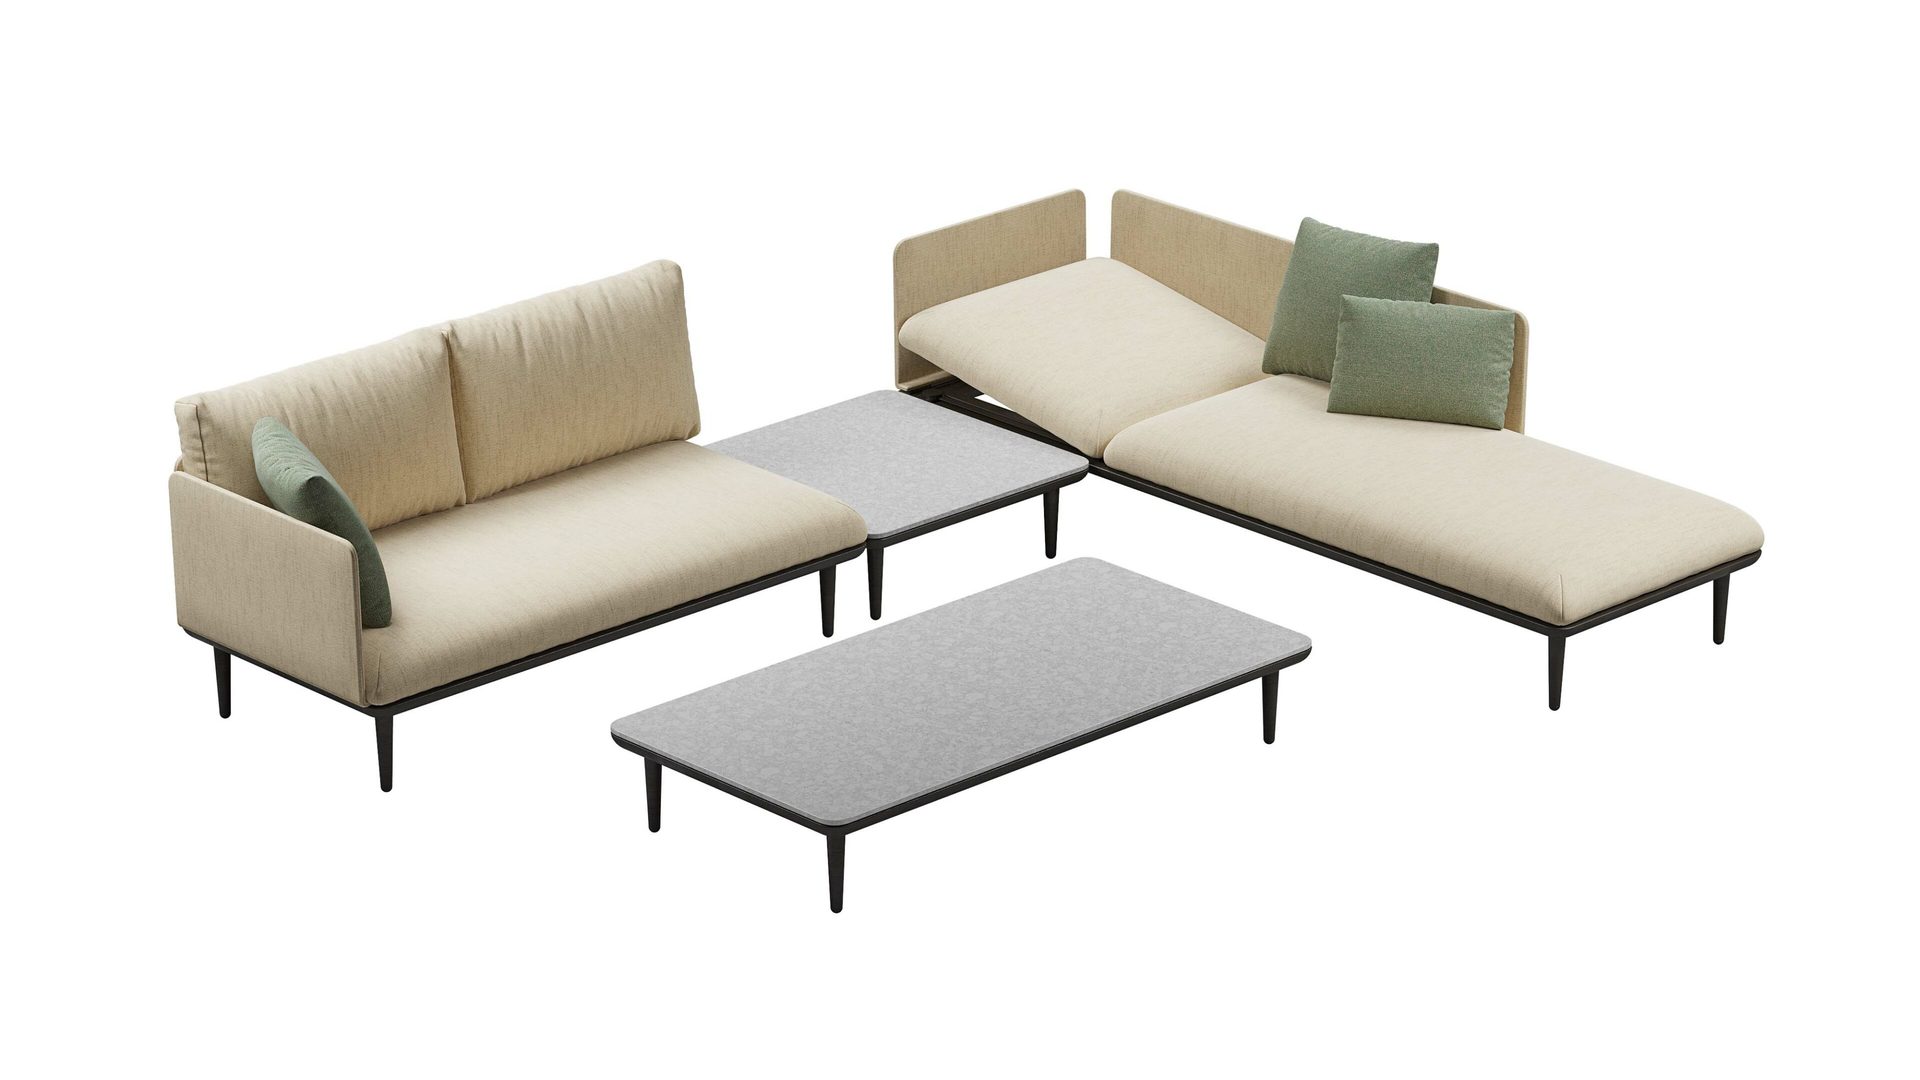 Royal Botania Styletto Lounge modulaire outdoor bank sofa set 3 HORA Barneveld 1.jpg